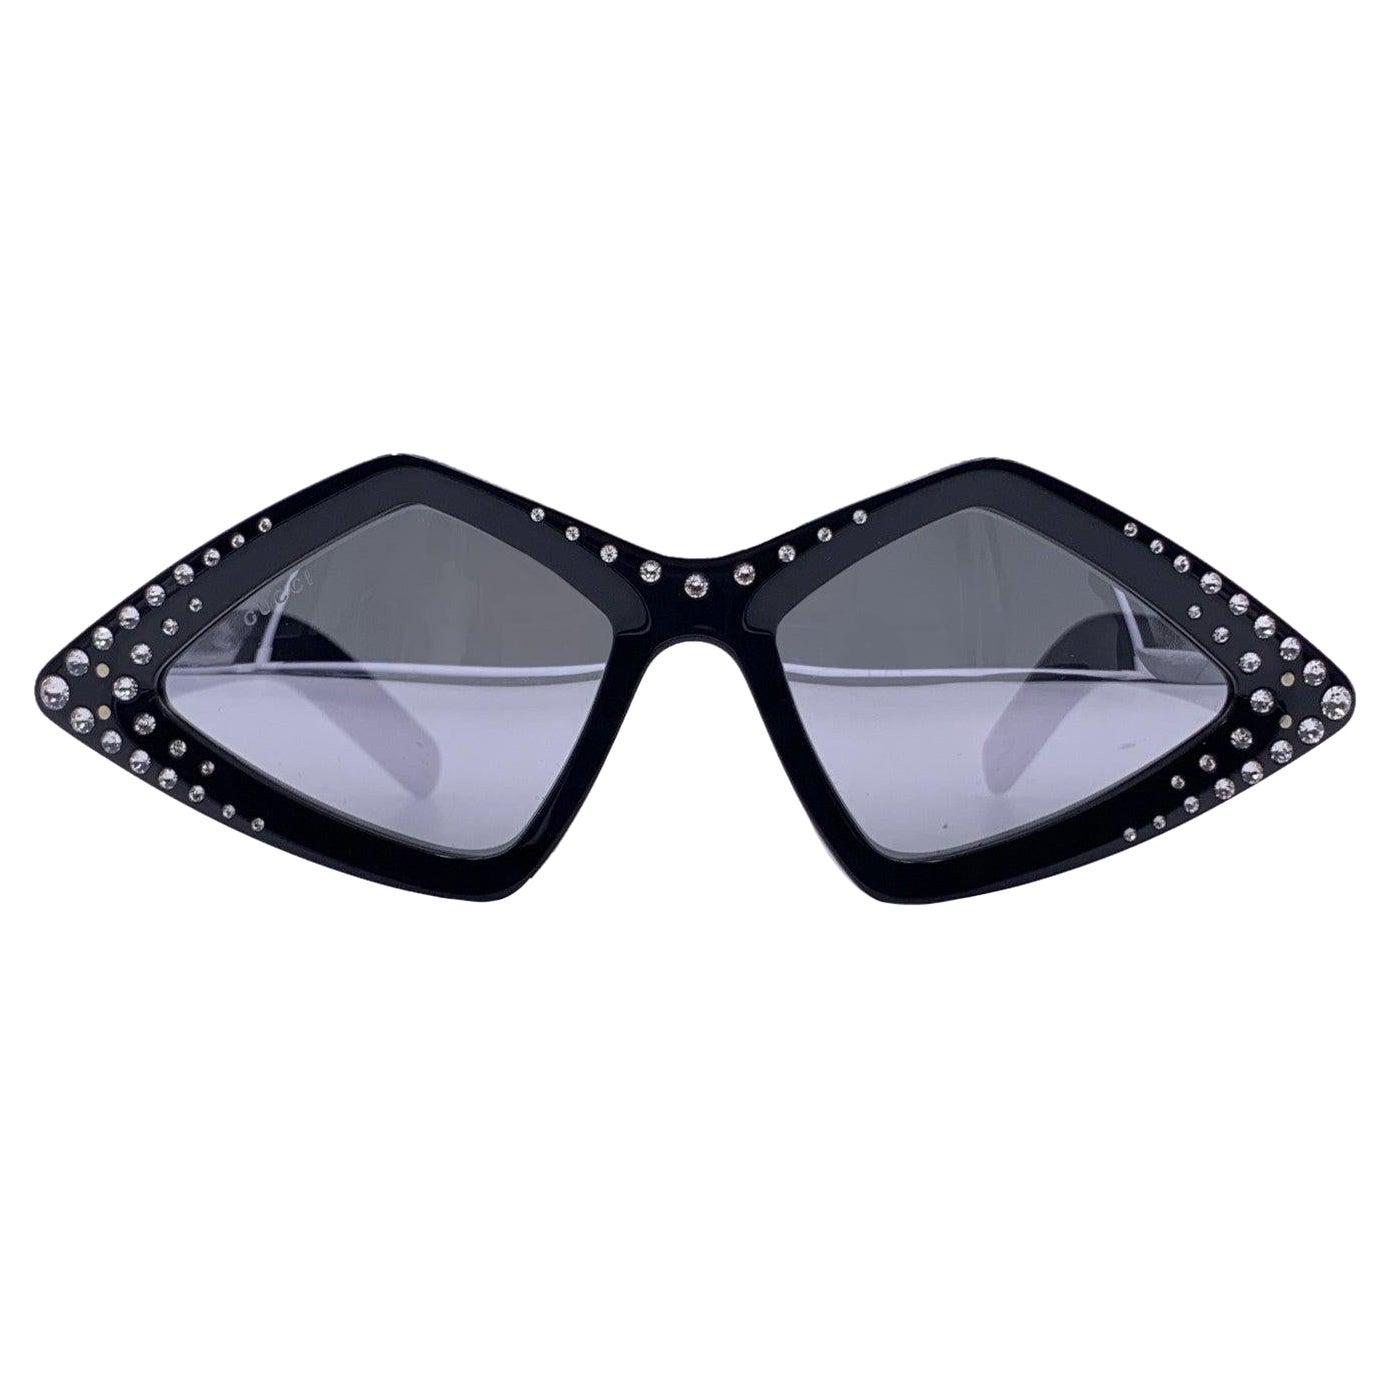 Gucci Black Acetate Rhinestones GG0496S Sunglasses 59/18 145mm